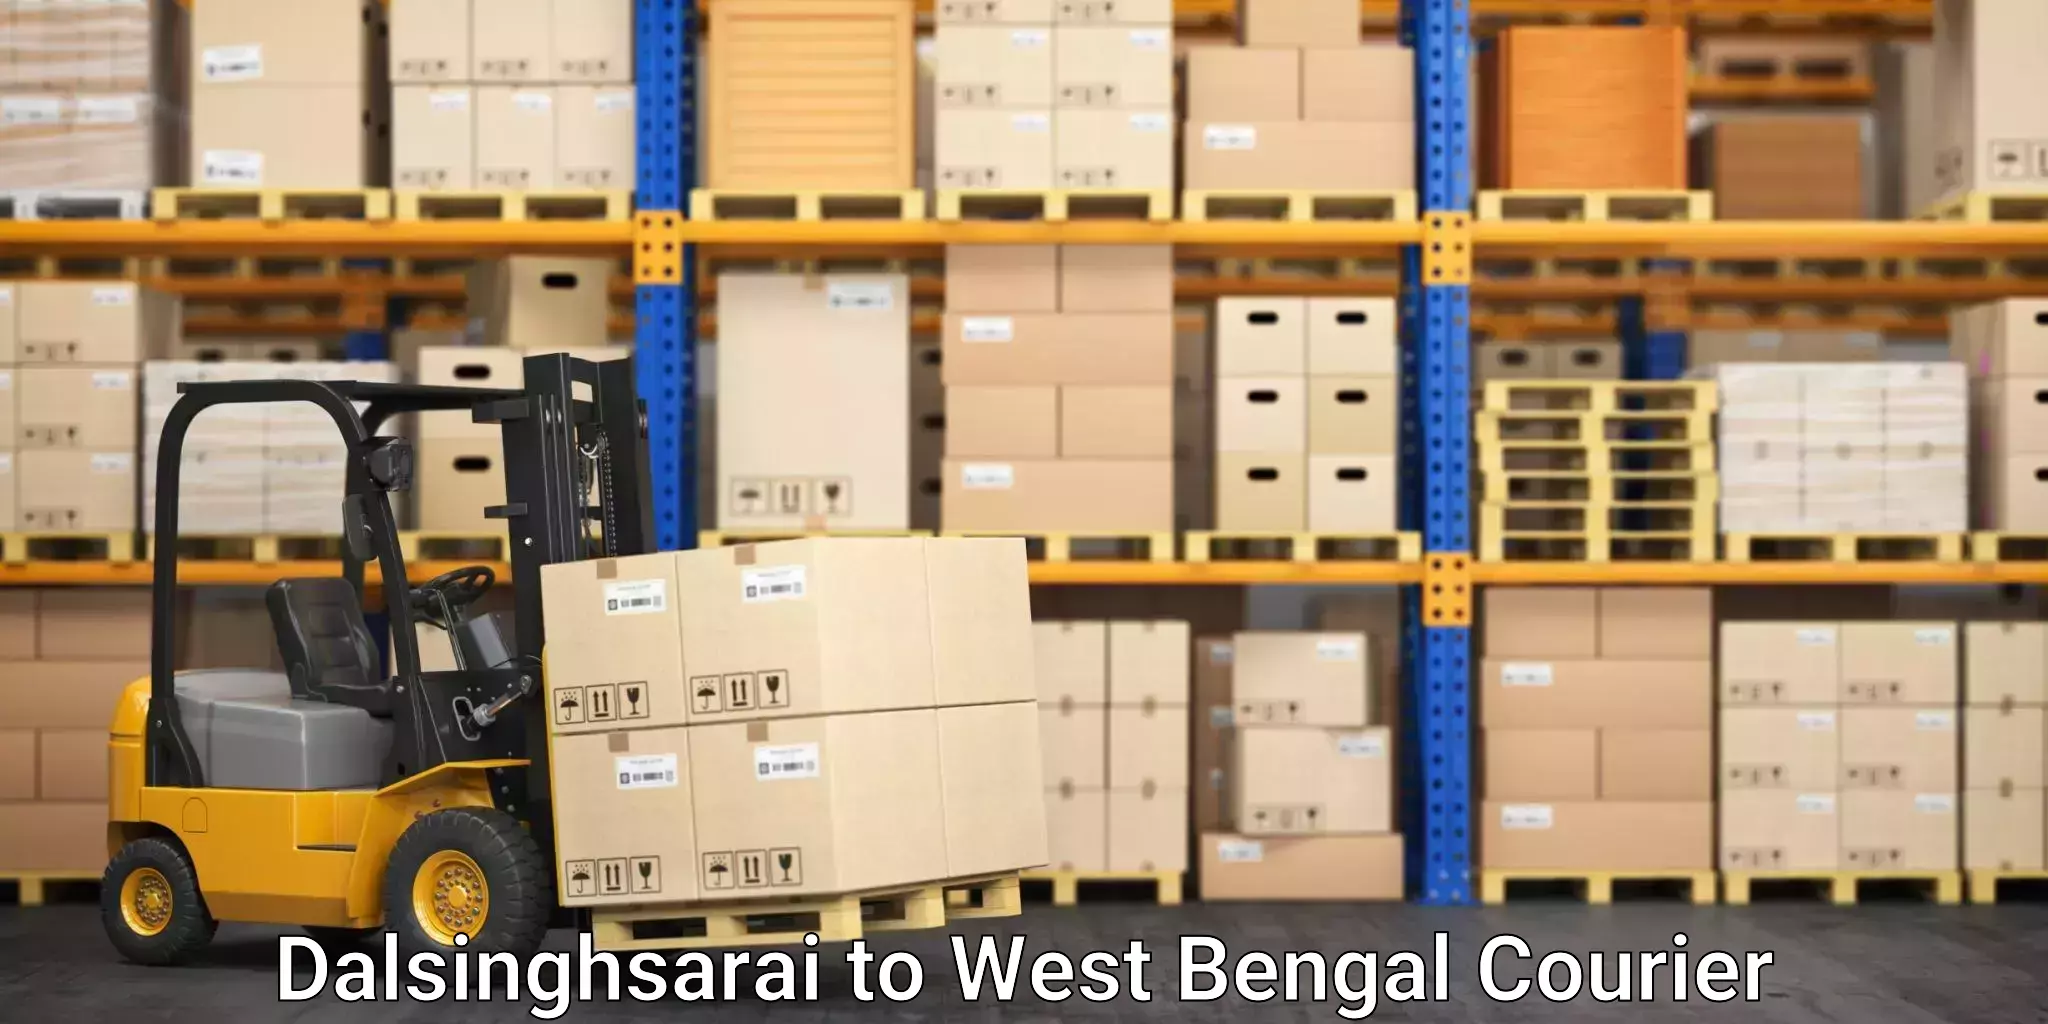 Expert goods movers in Dalsinghsarai to Siliguri